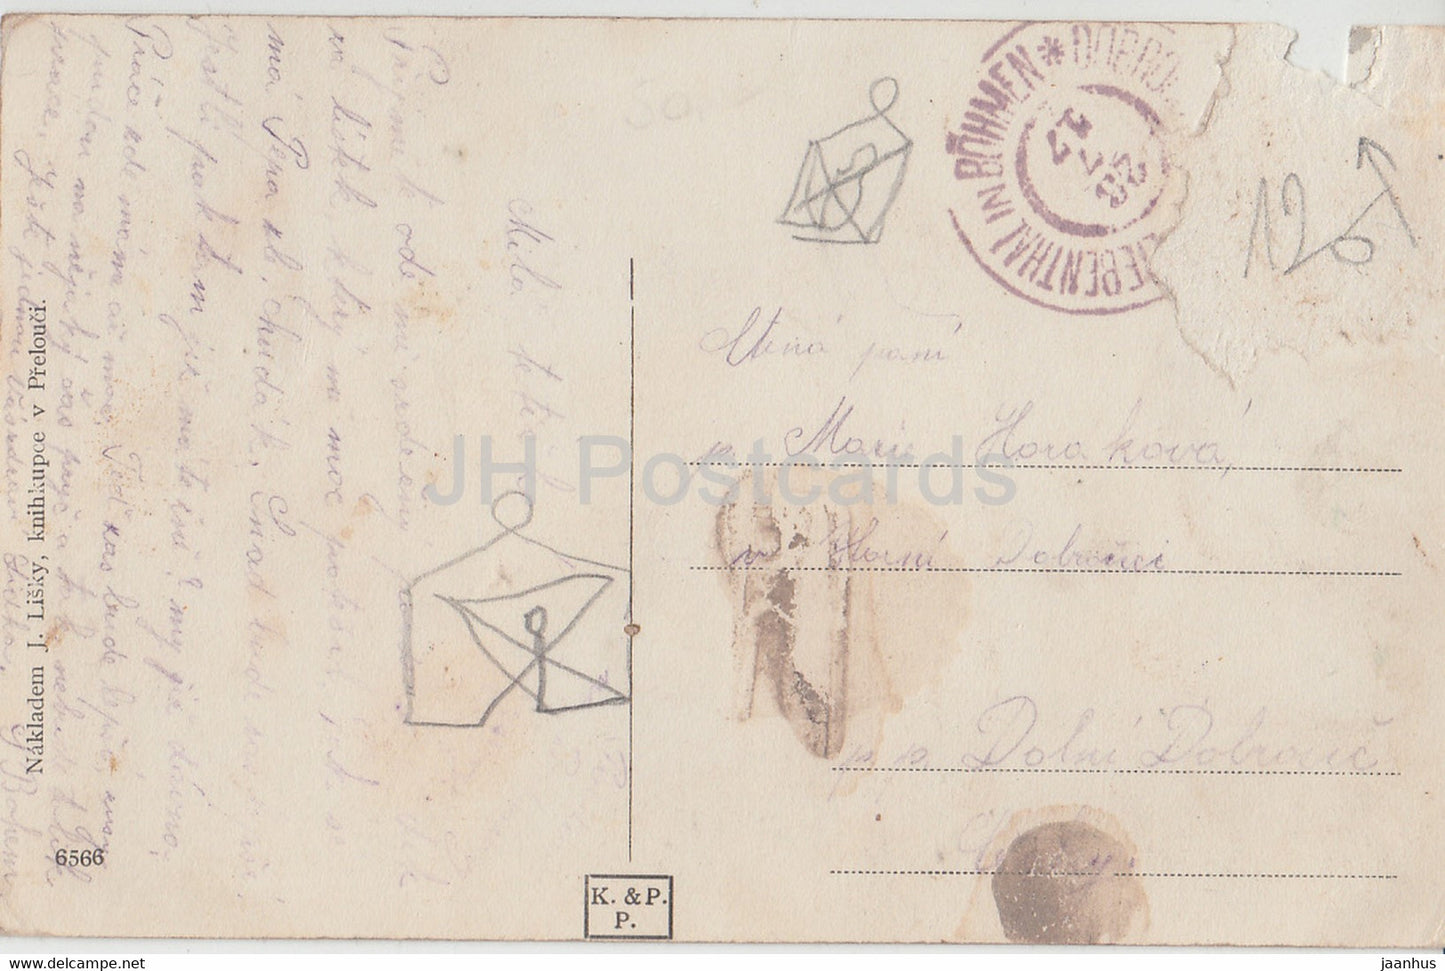 Vyrov - old postcard - 1917 - Czech Republic - used